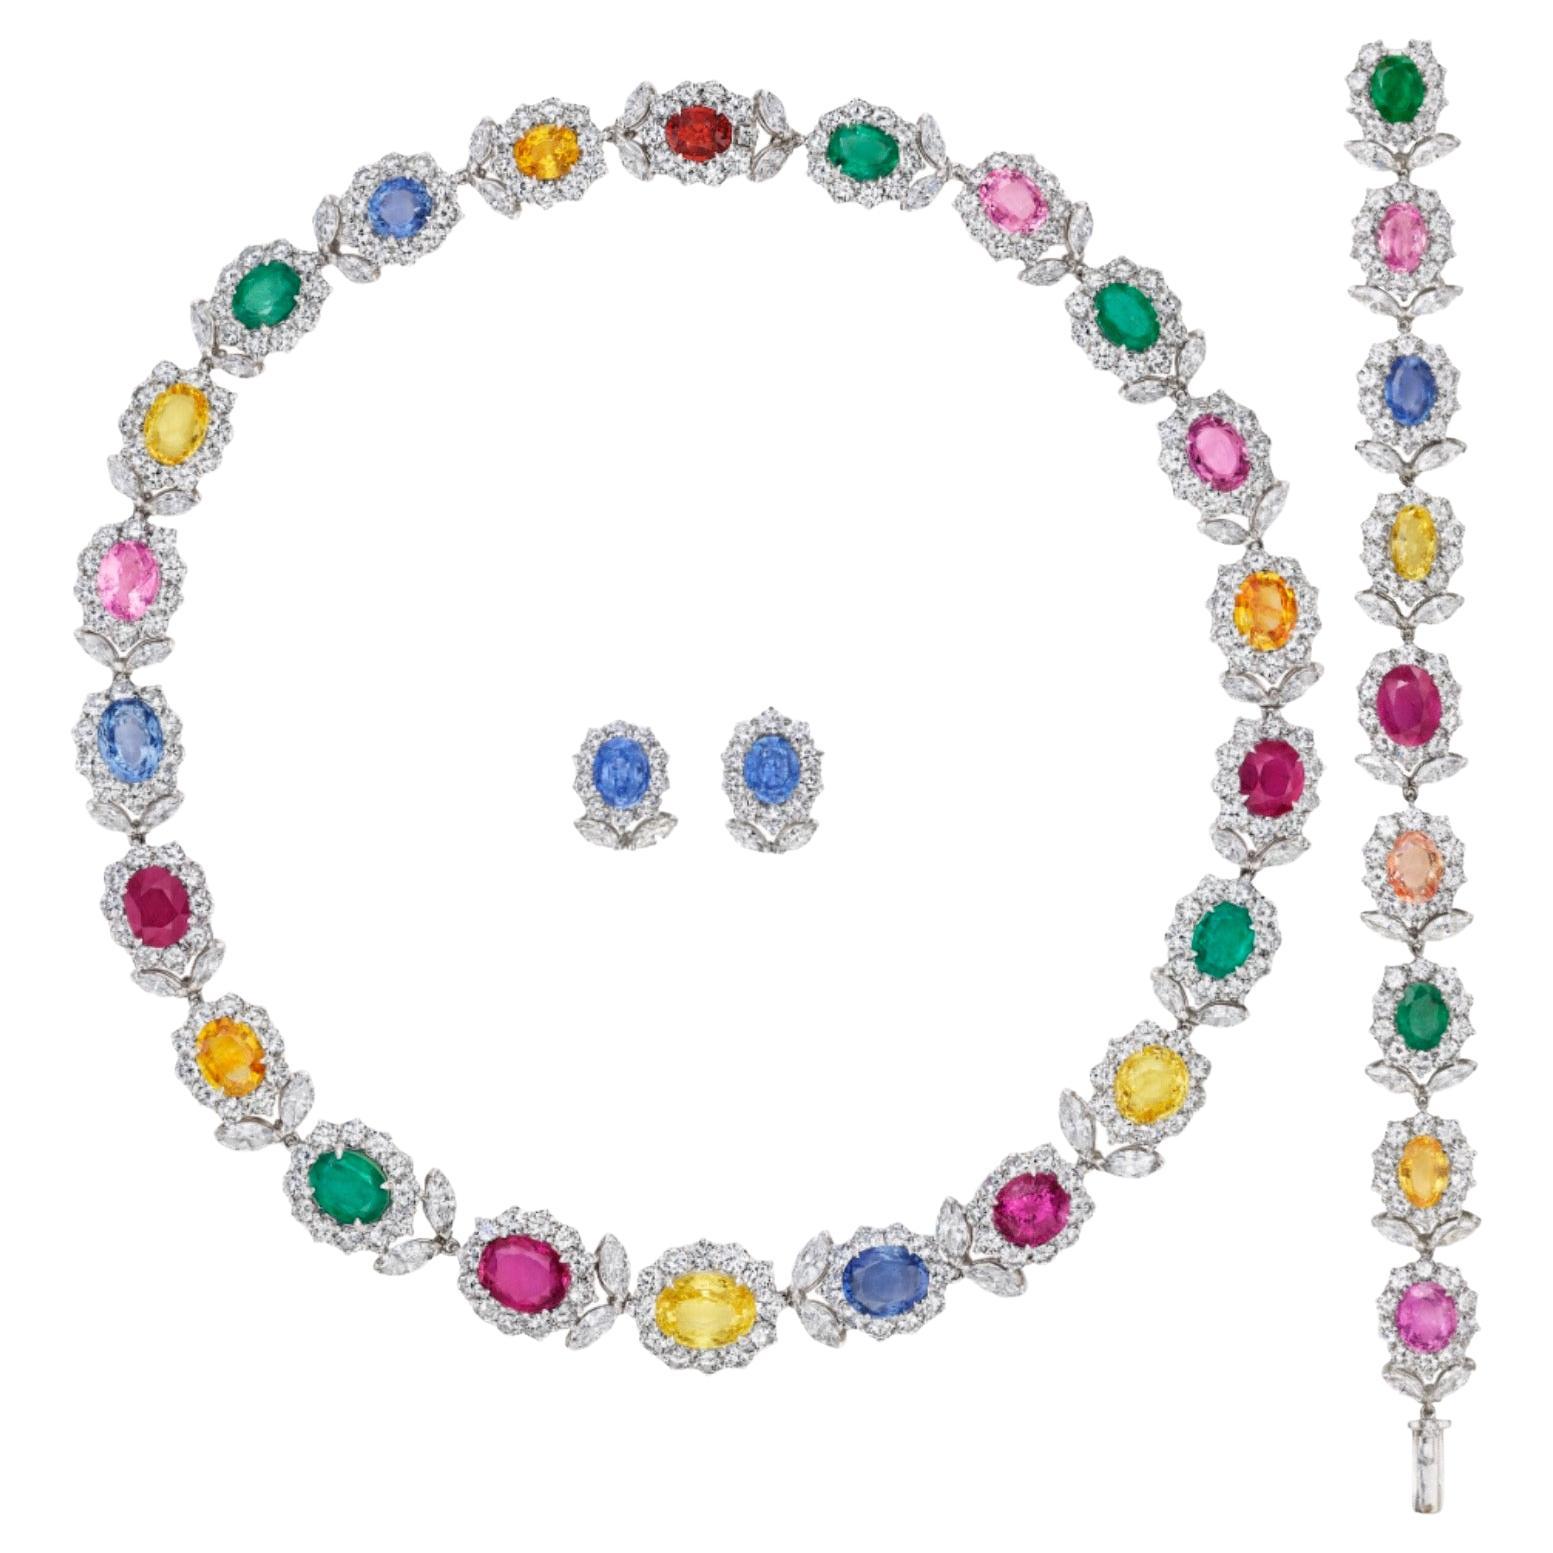 Ceylon Sapphire, Burma Spinel, Brazilian Emerald and Diamond Jewelry Set